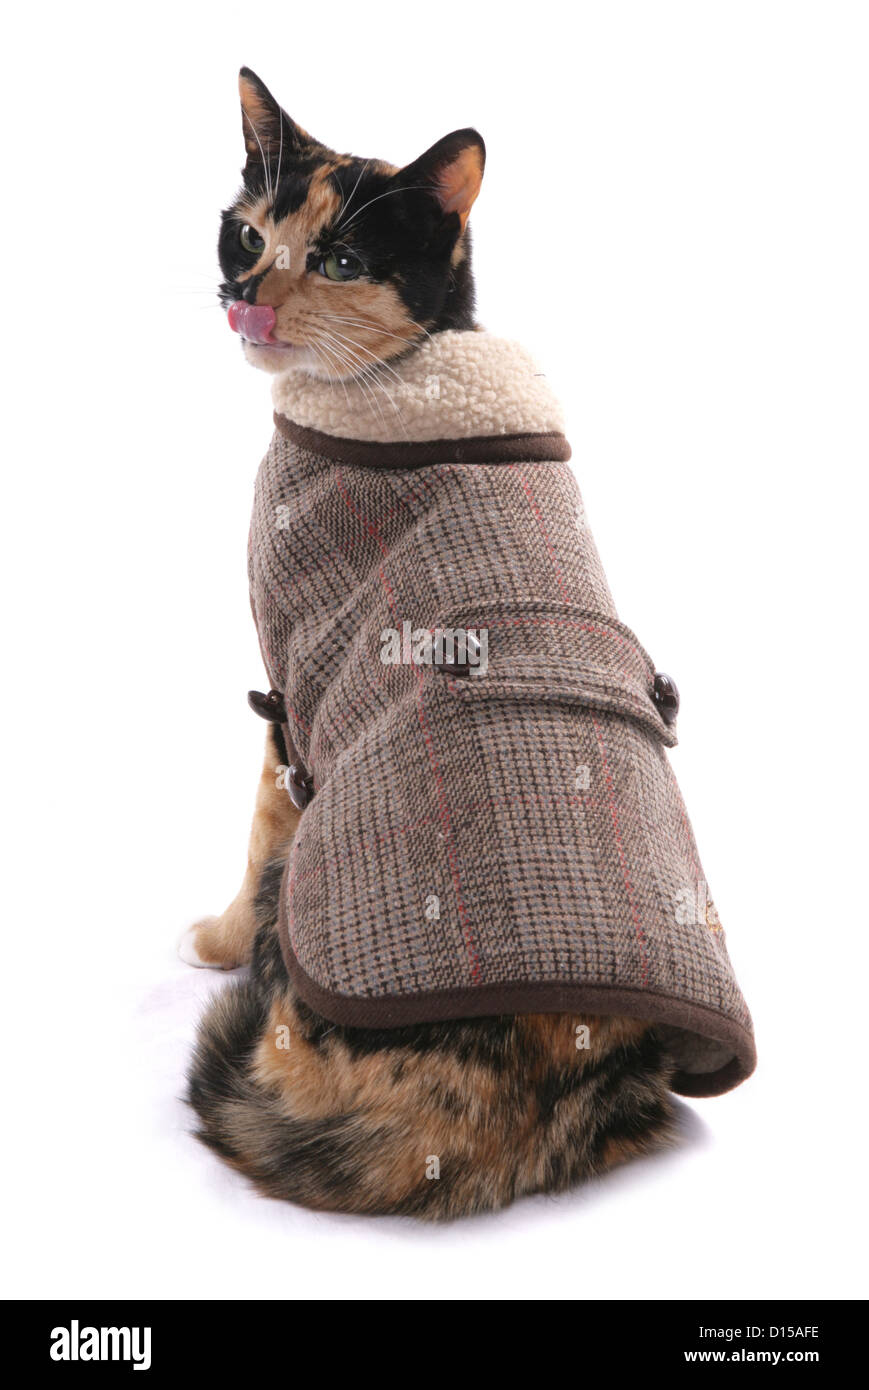 Cat wearing a jacket Stock Photo - Alamy